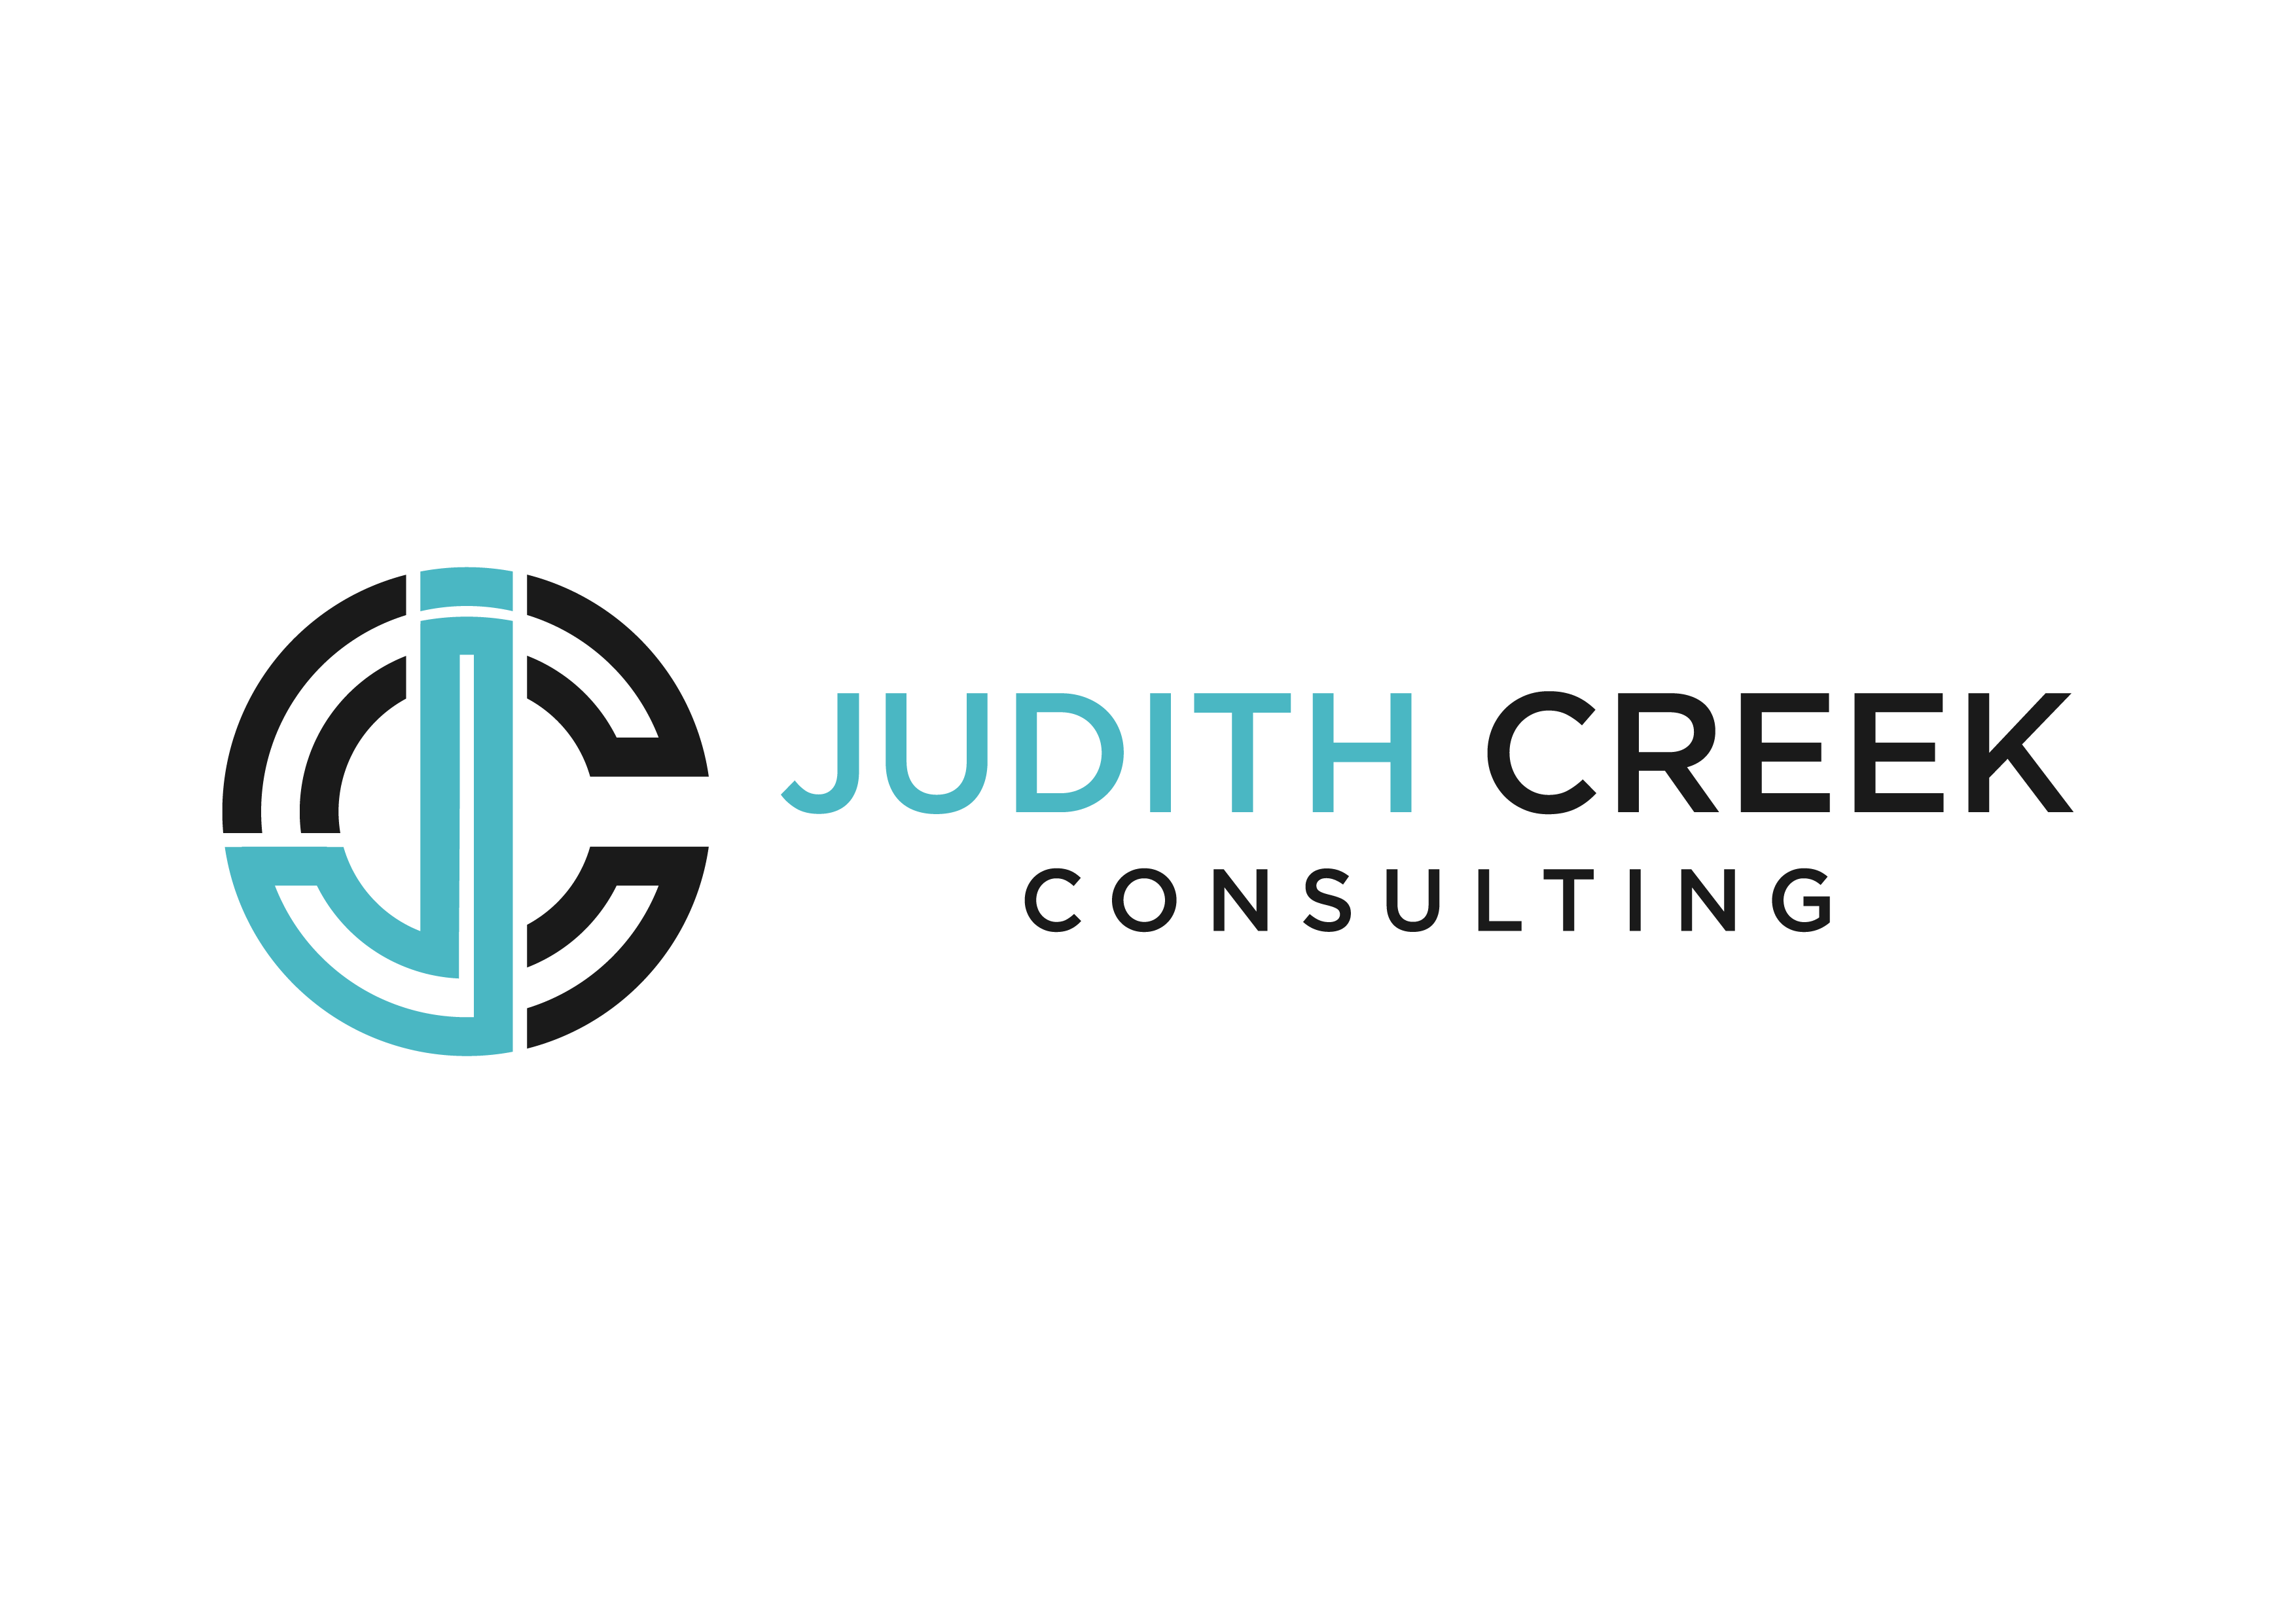 Judith Creek Consulting